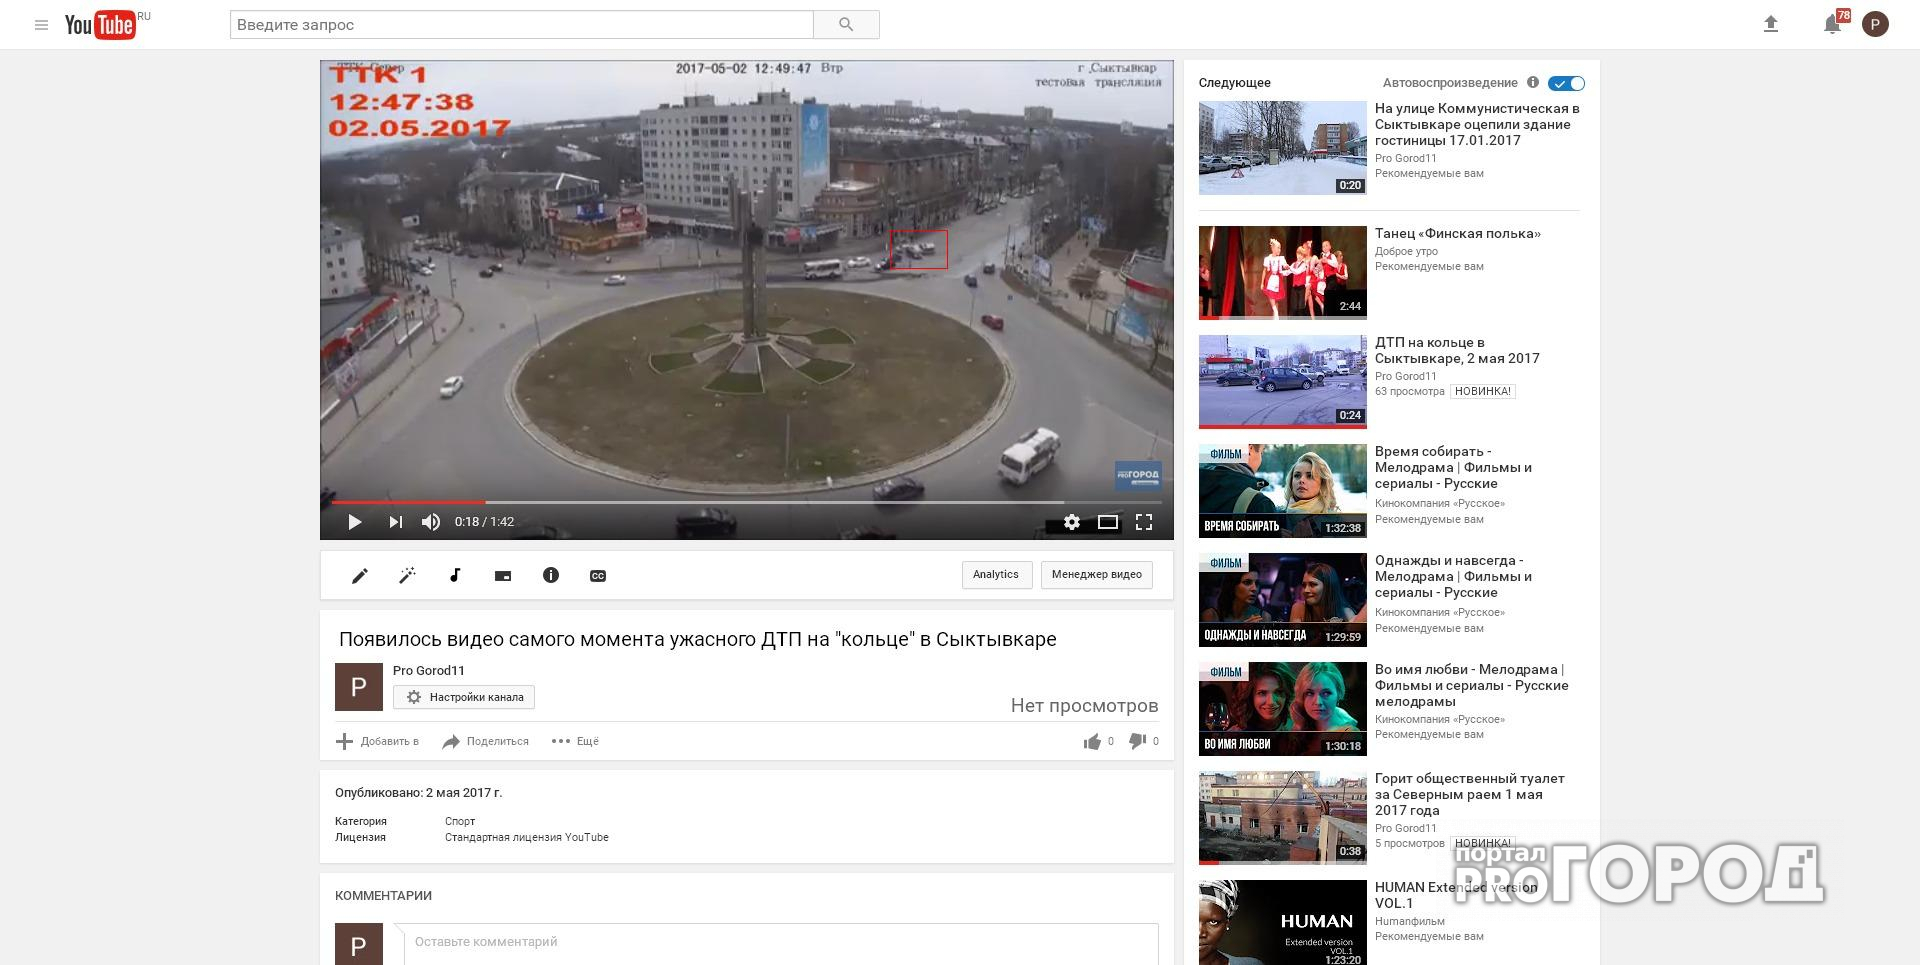 Появилось видео самого момента ужасного ДТП на "кольце" в Сыктывкаре